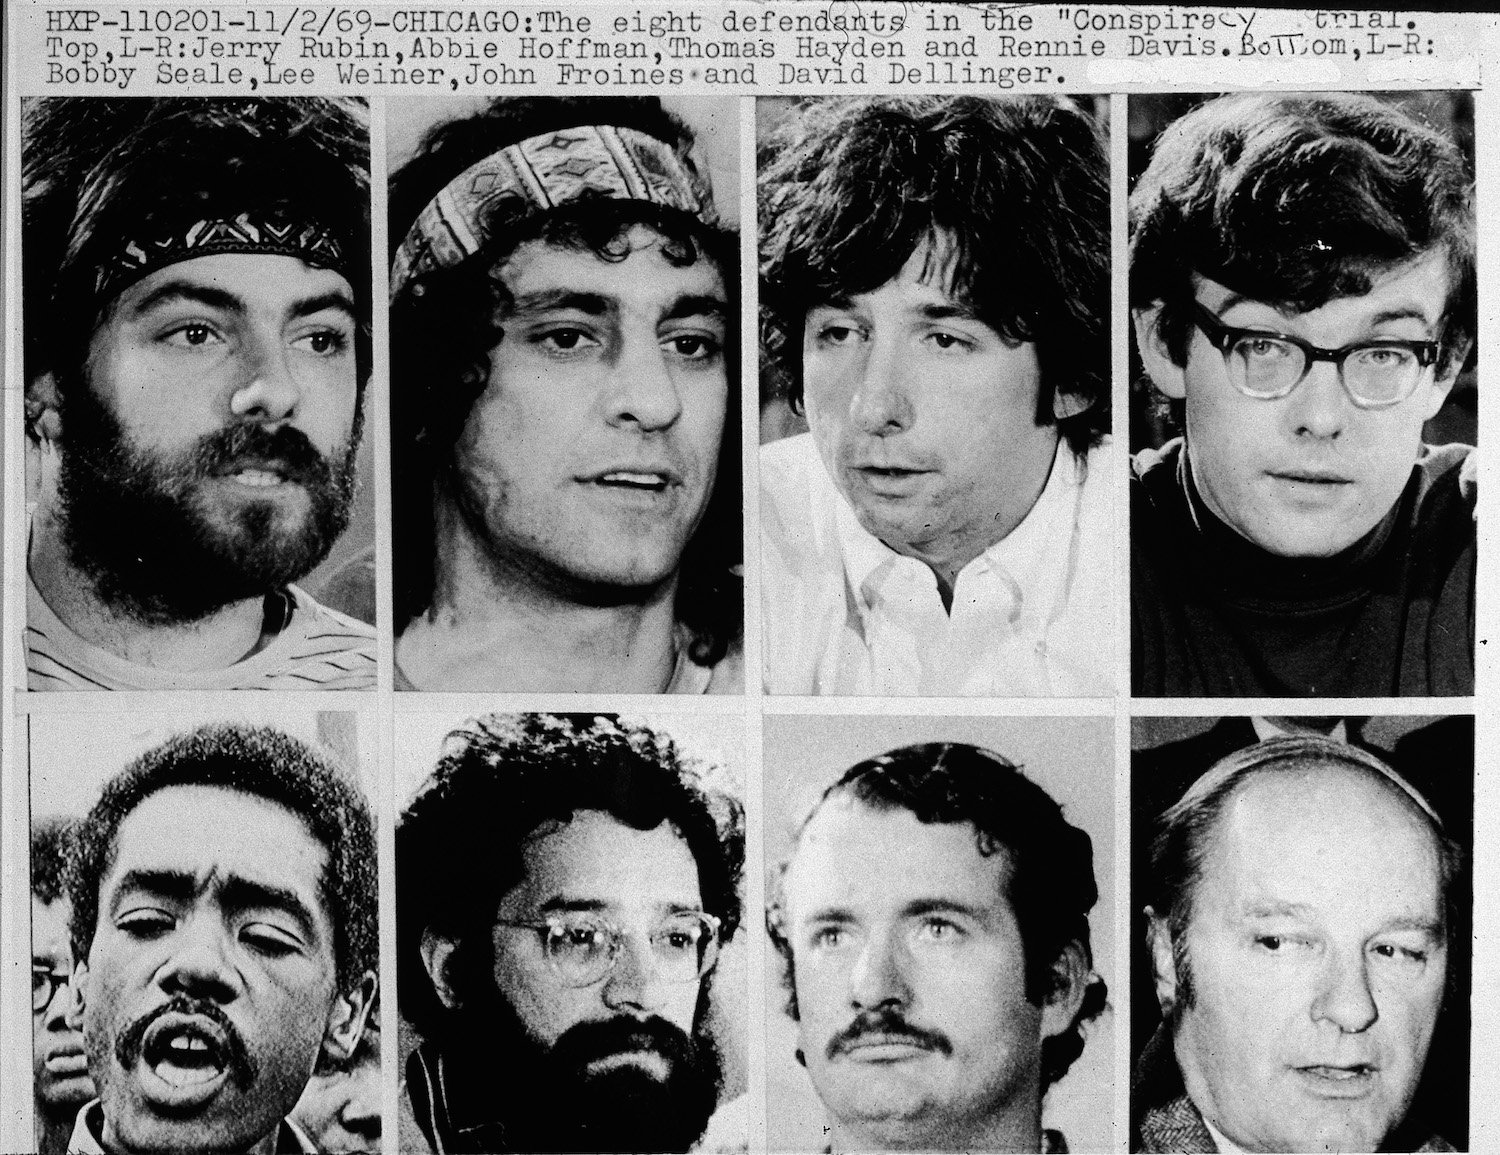 Photos of the Chicago 8 defendants